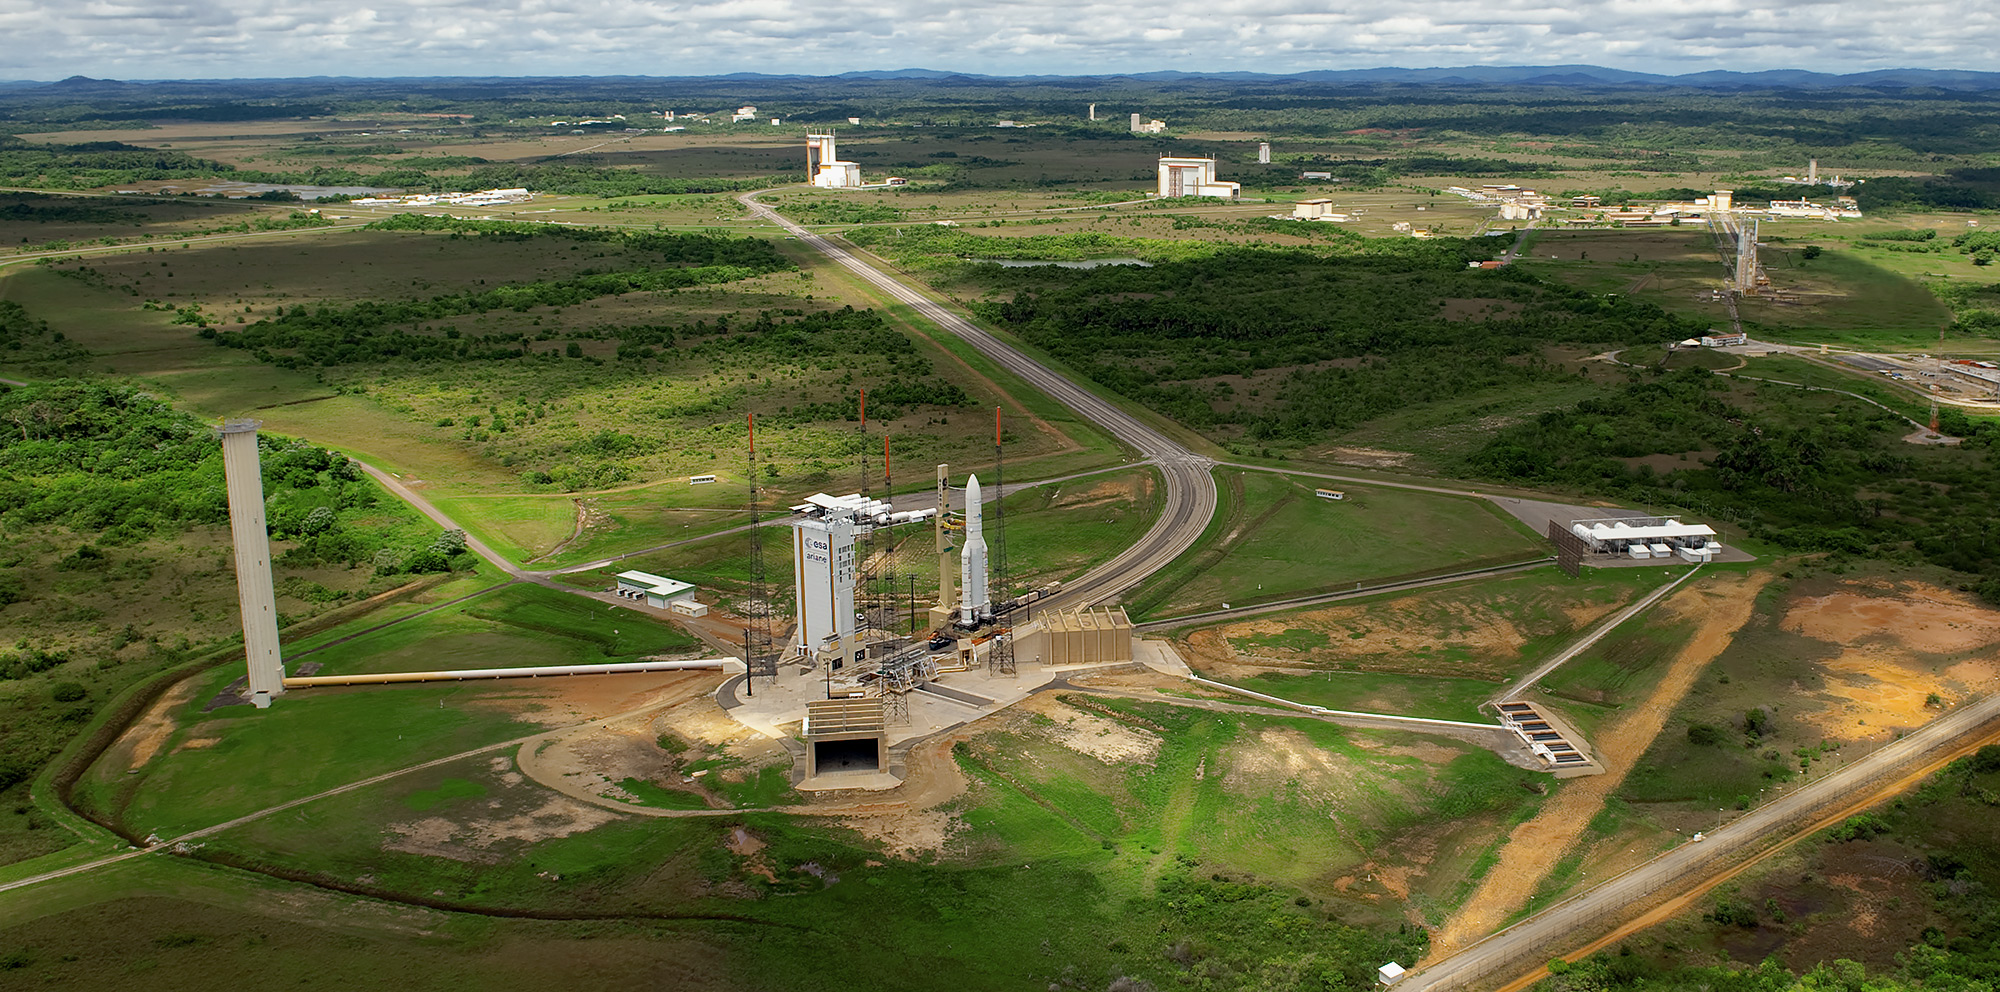 Guiana Space Center